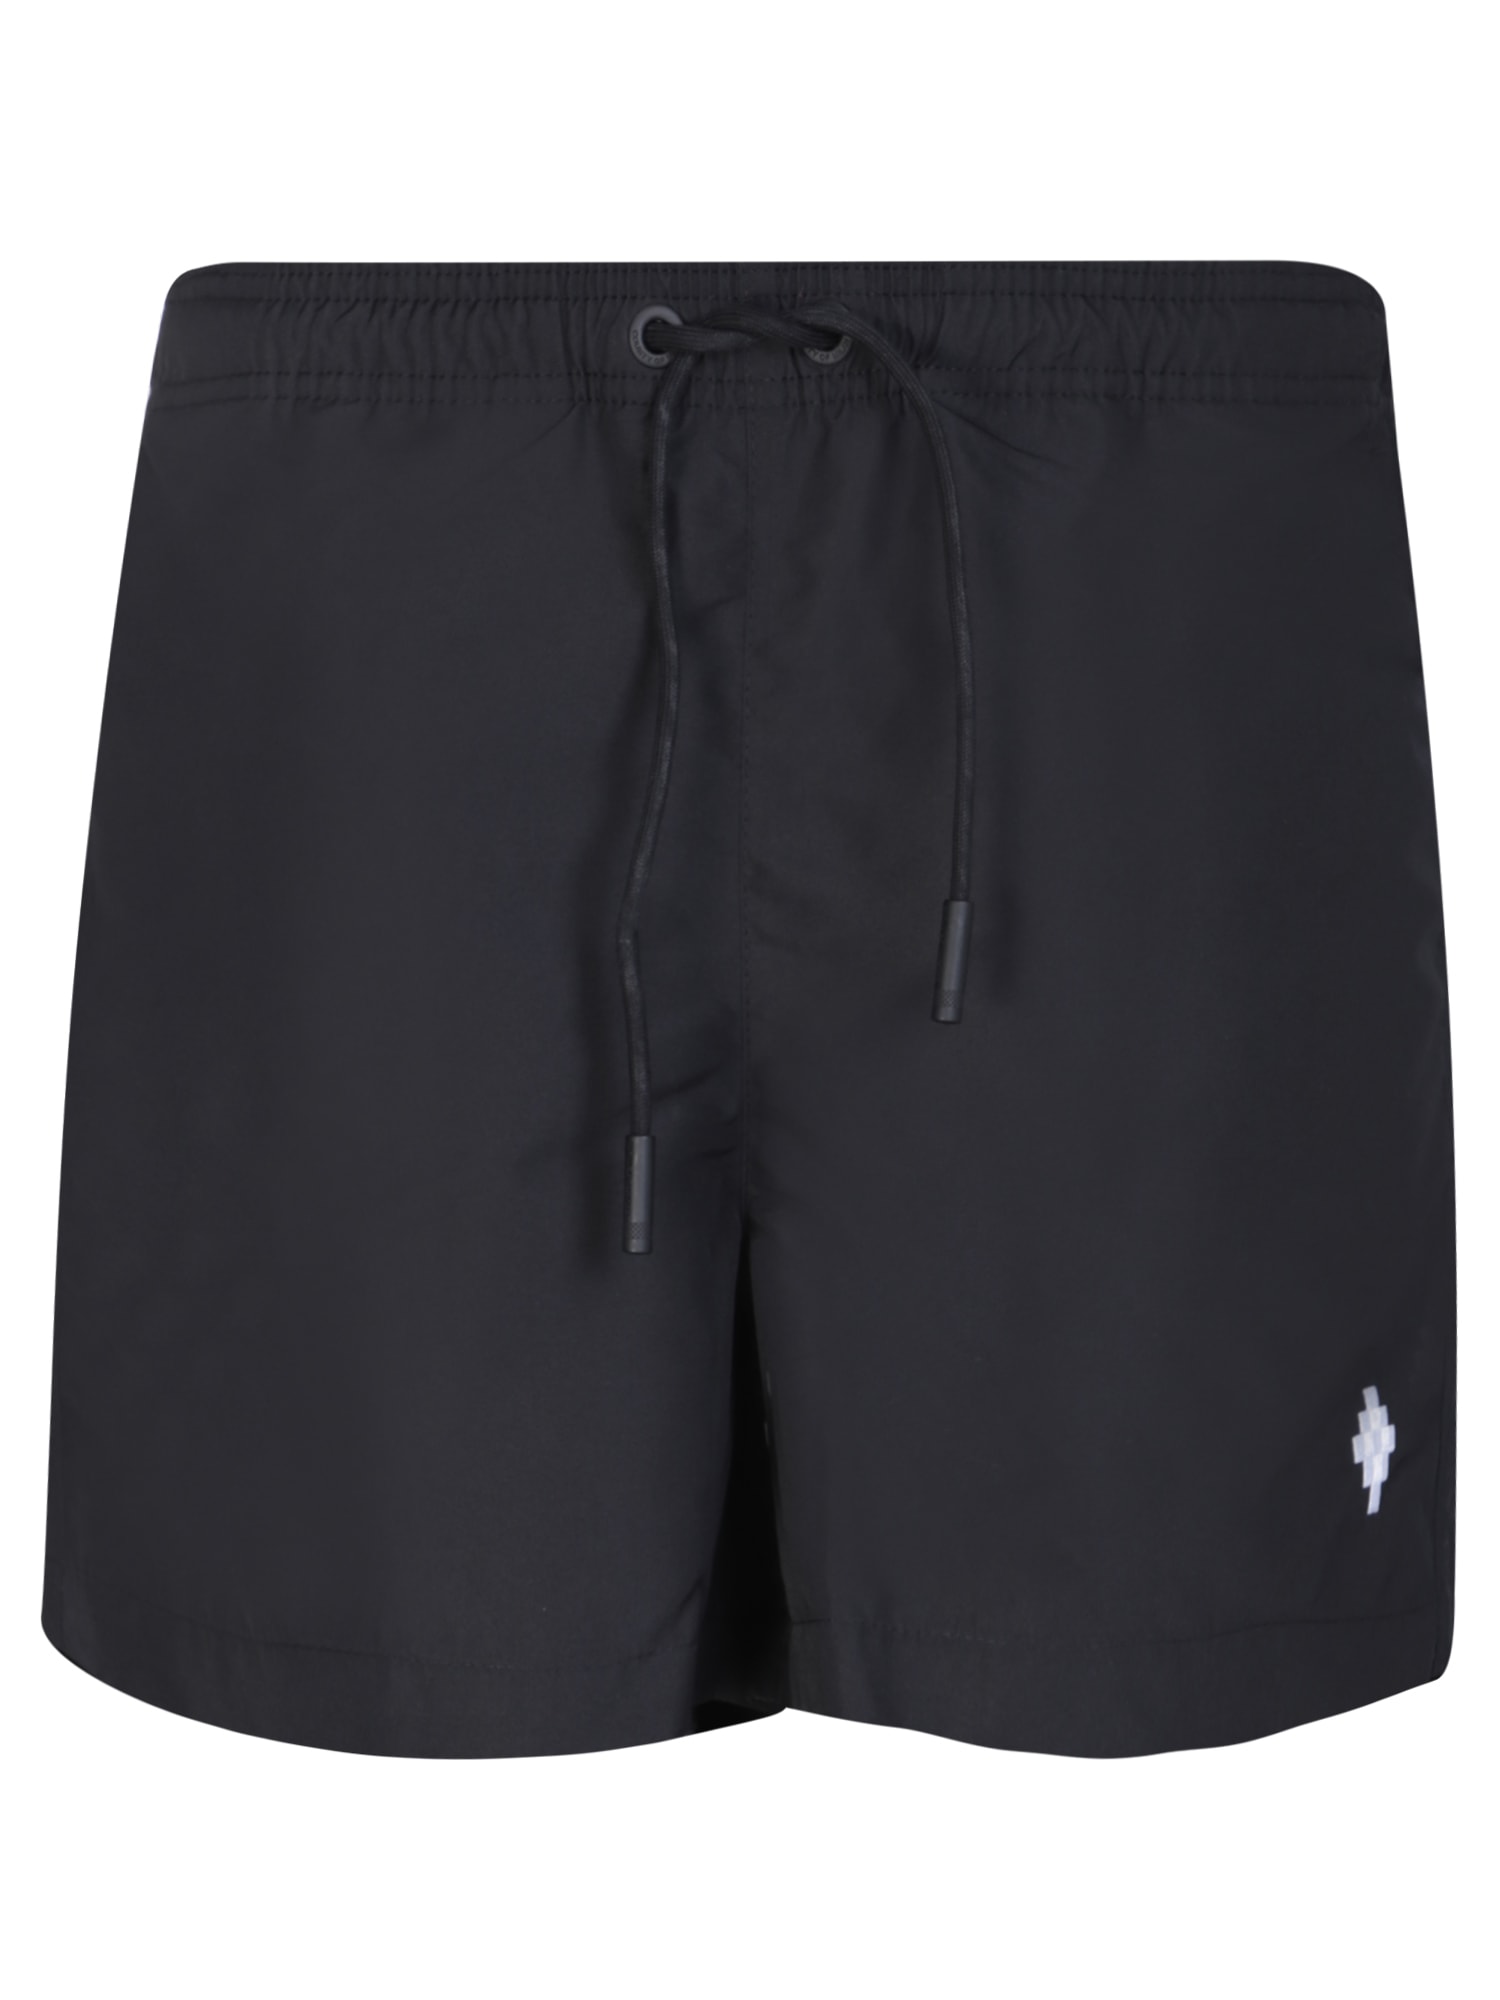 Colourful Cross Swim Shorts In Black